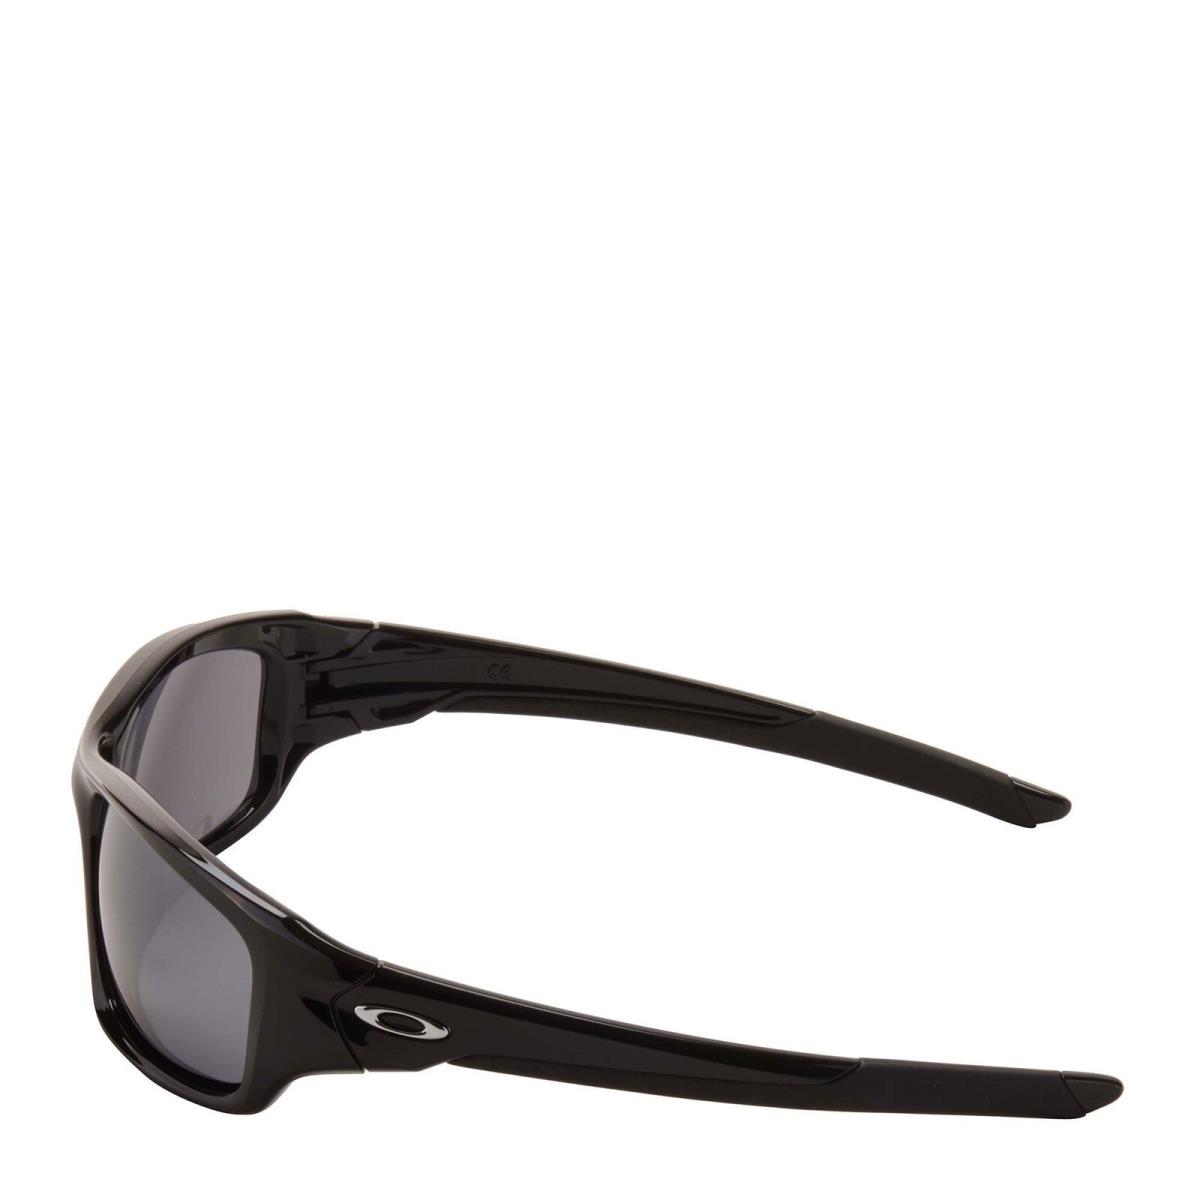 OO9236-01 Mens Oakley Valve Sunglasses